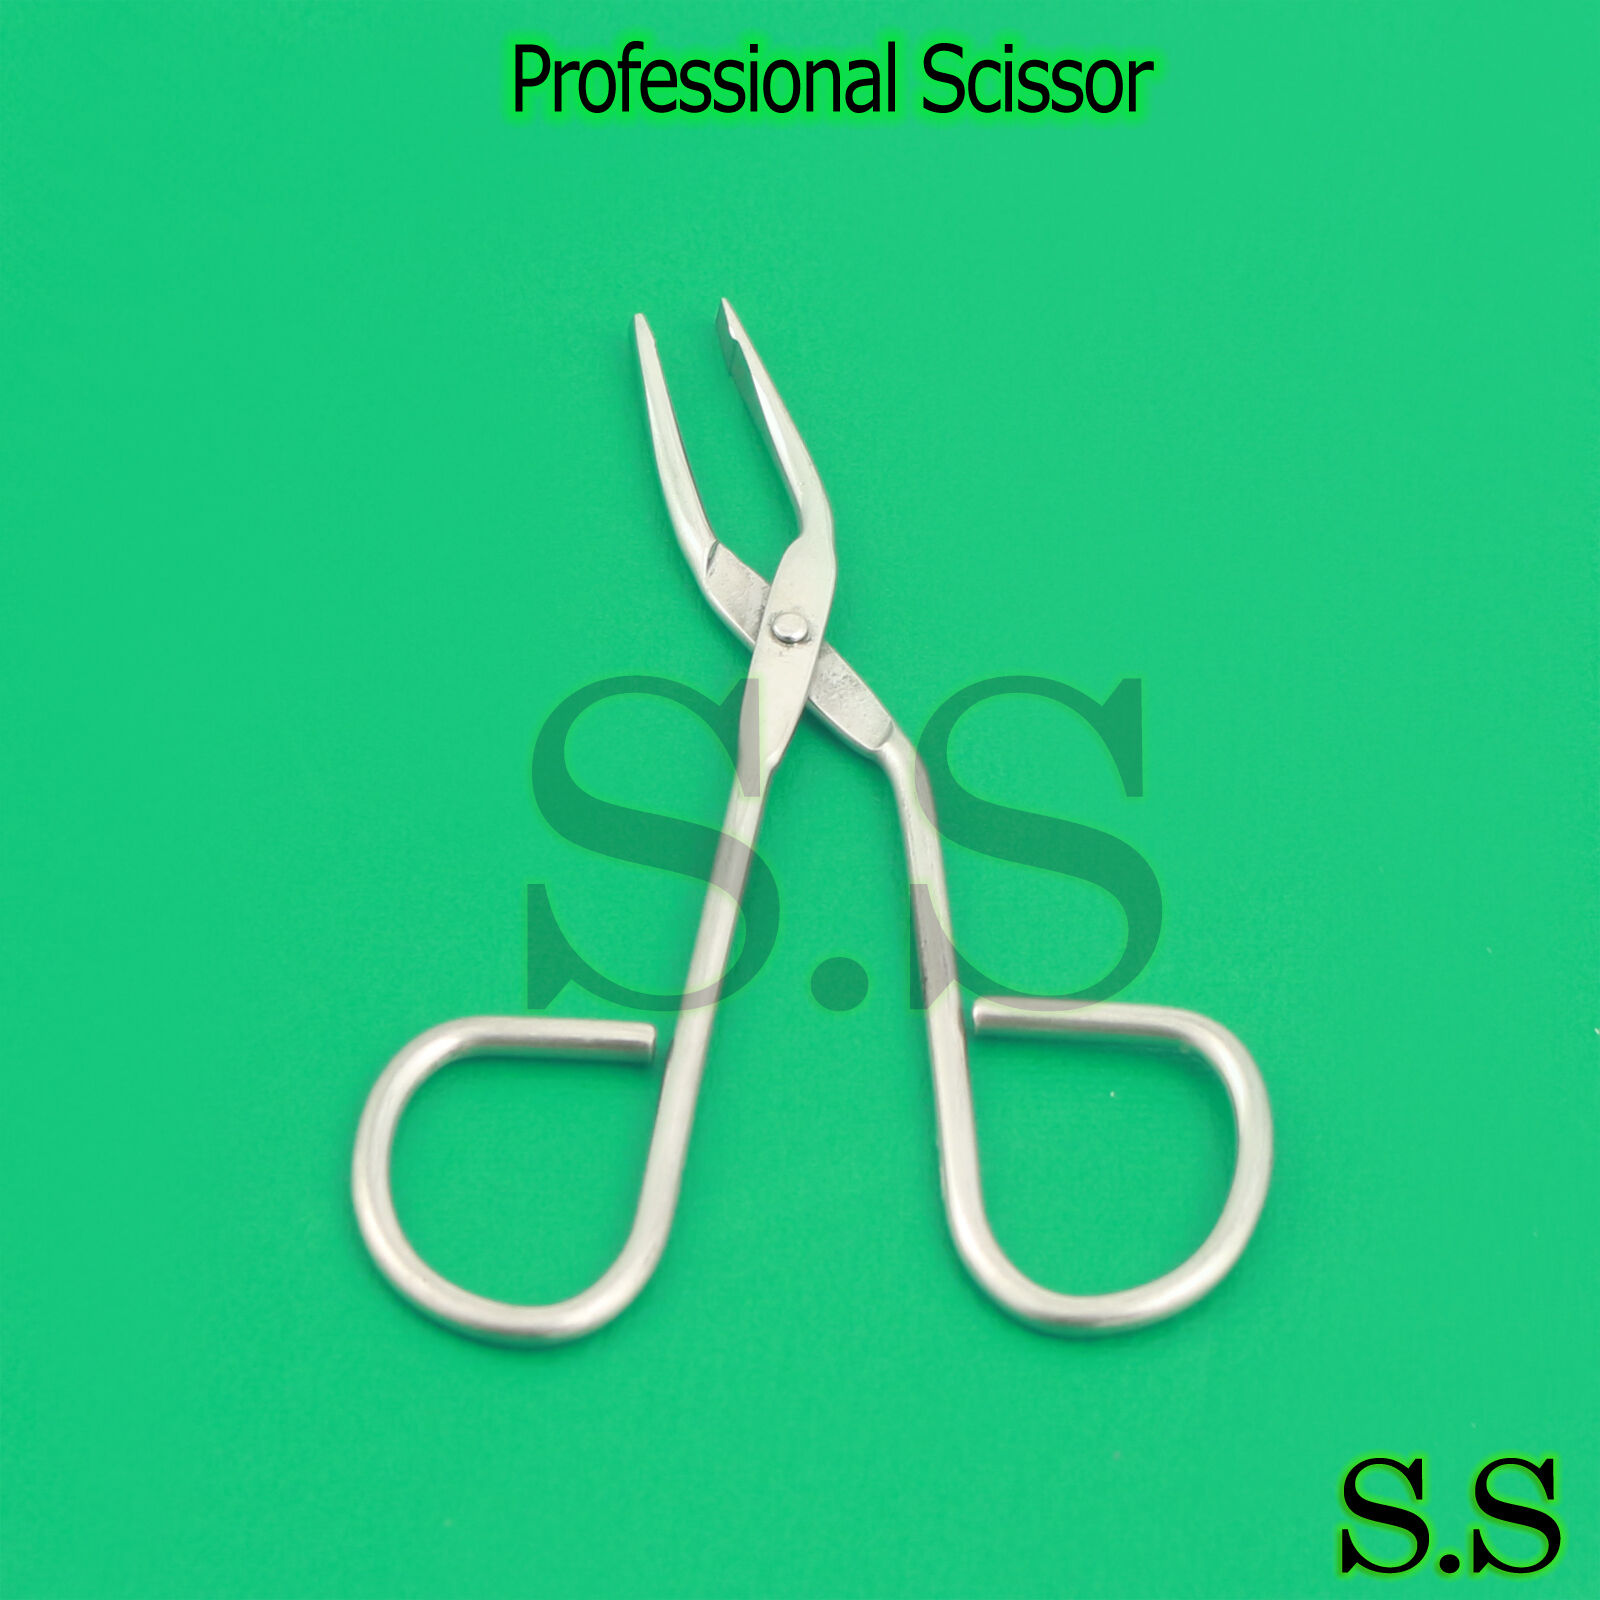 Scissor Tweezers Slant Tip Square Professional Salon Quality New Eyebrow